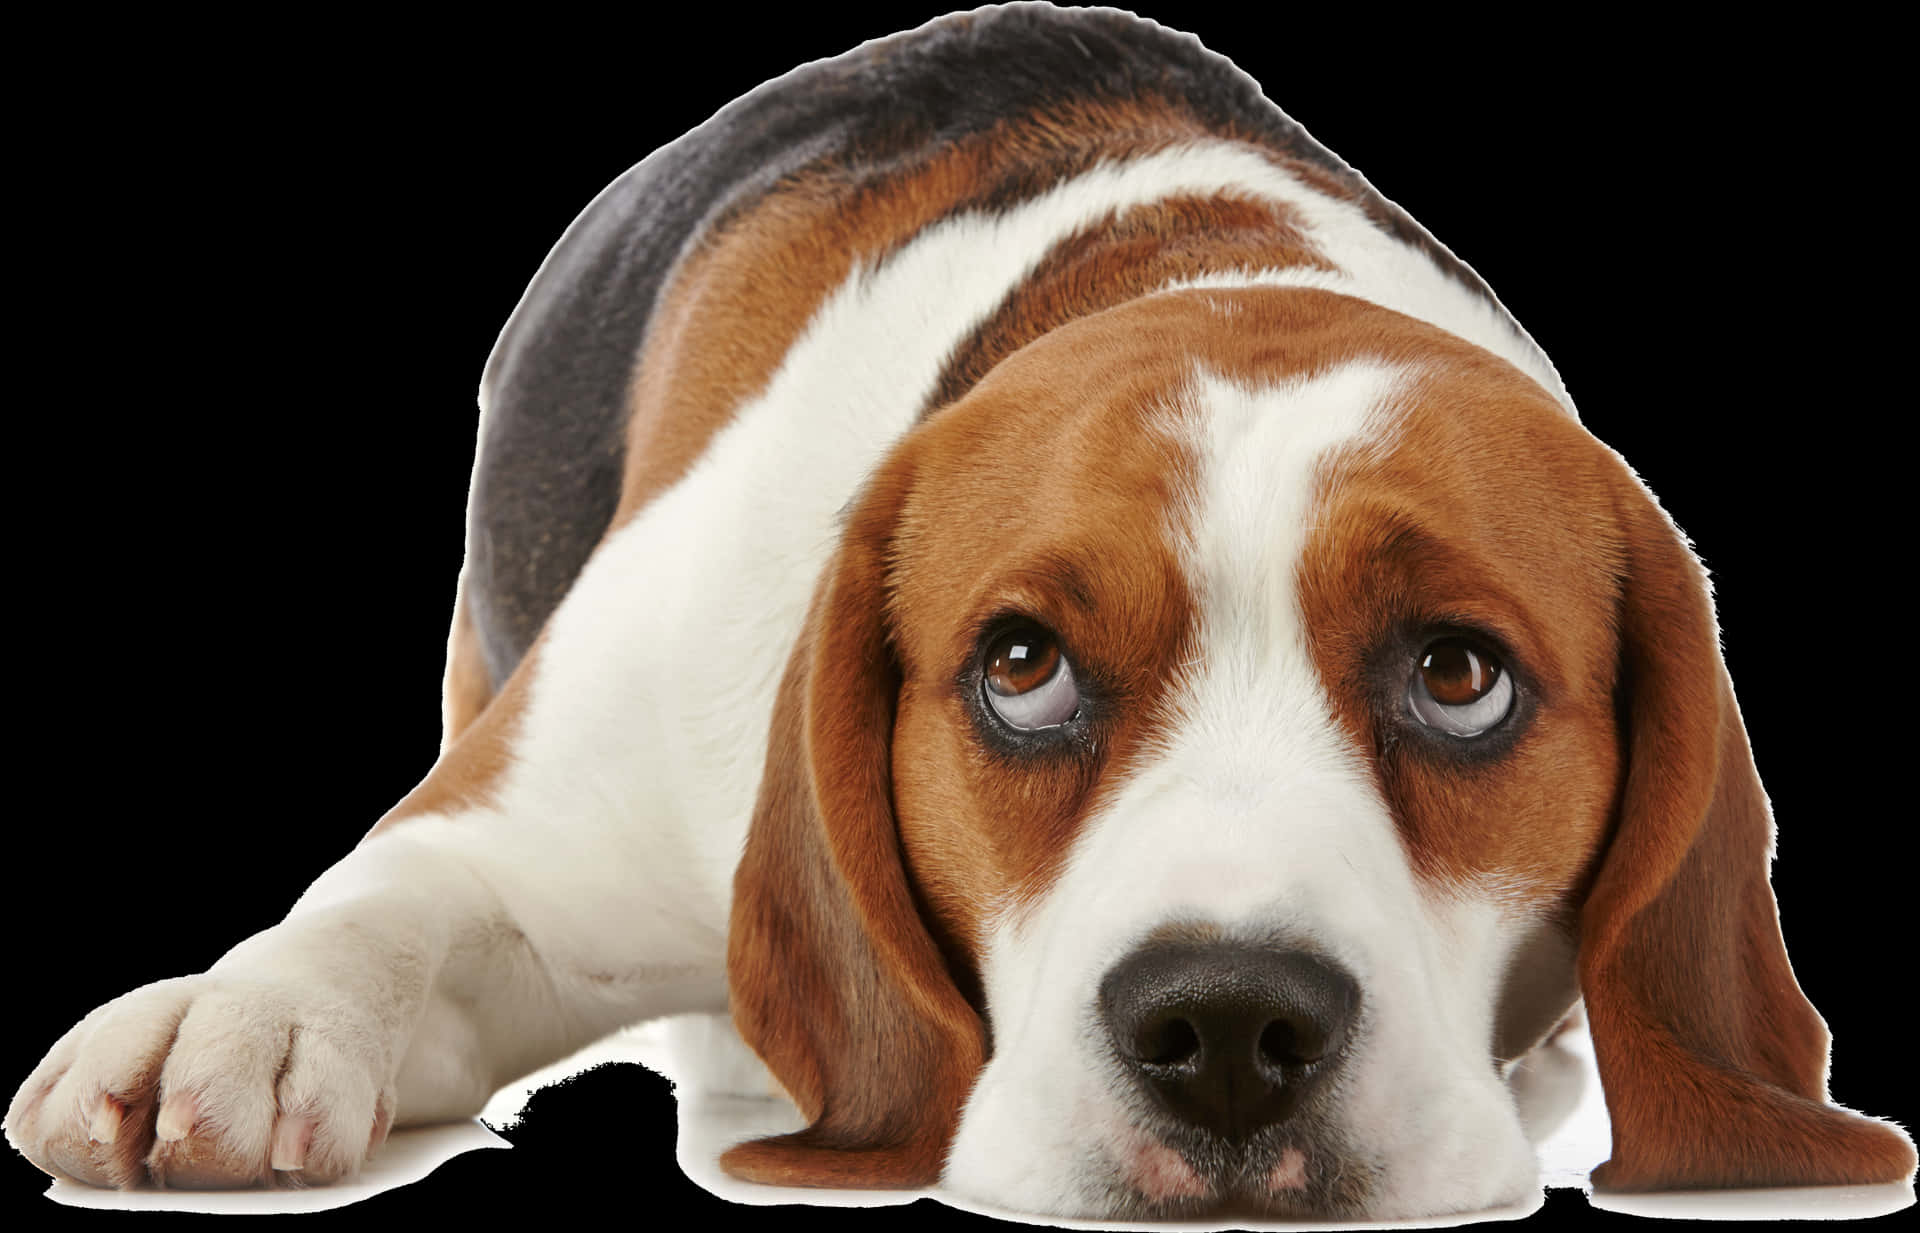 Beagle Dog Lying Down Black Background.jpg PNG image